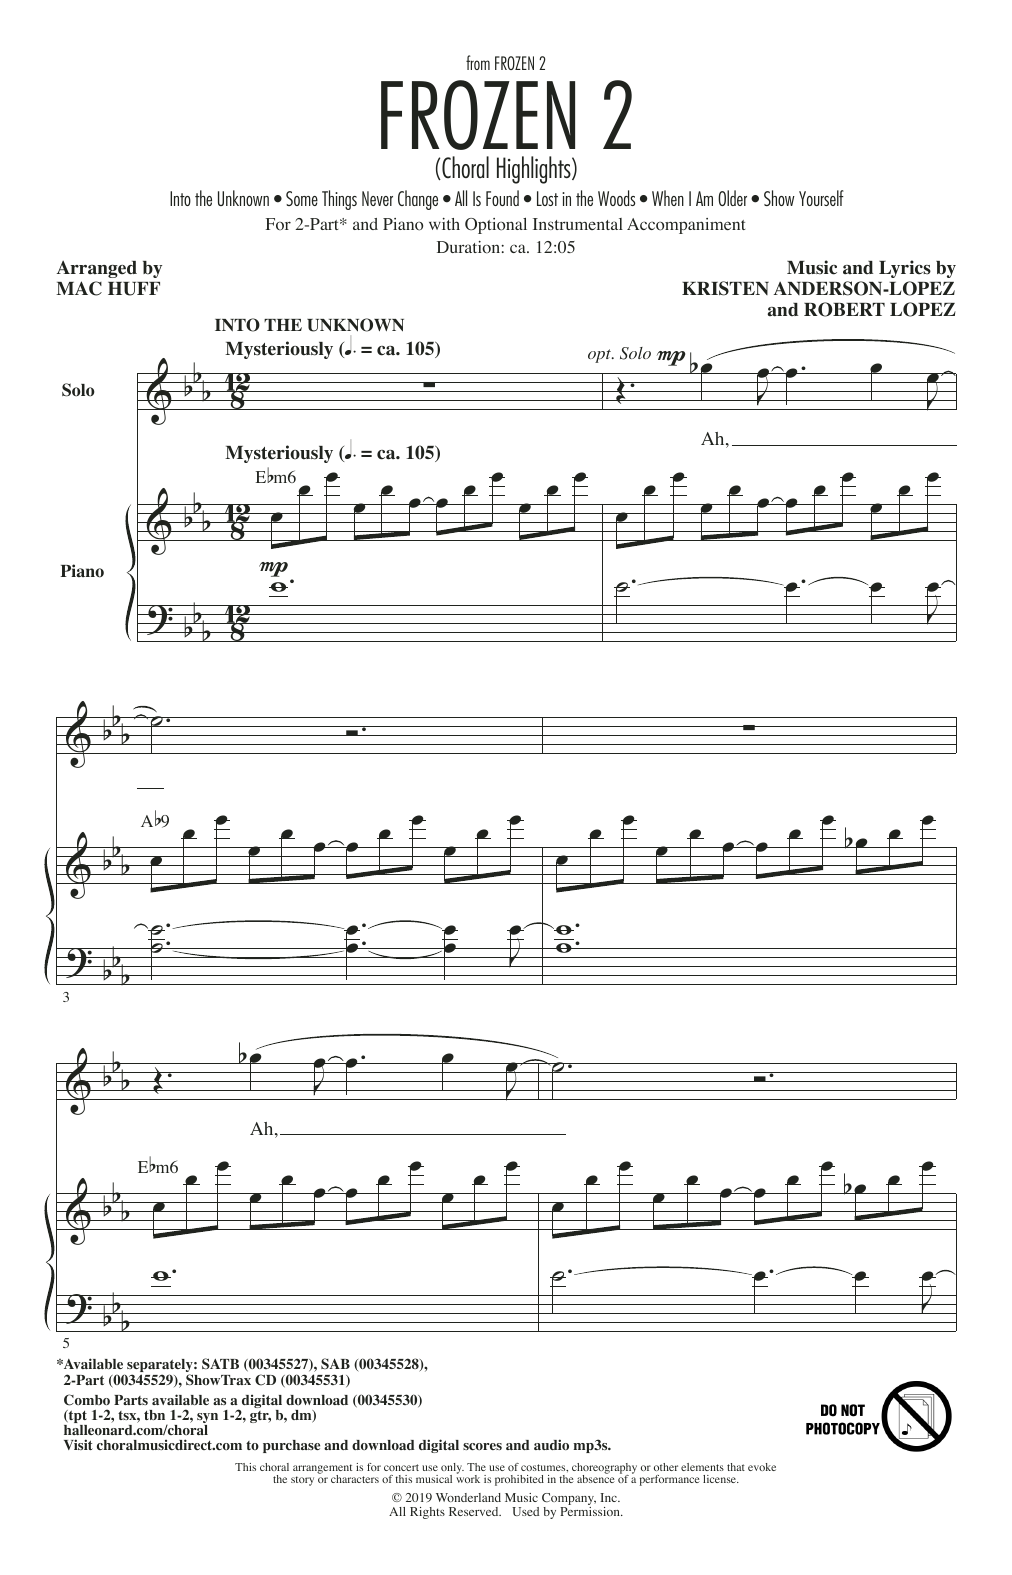 Kristen Anderson-Lopez & Robert Lopez Frozen 2 (Choral Highlights) (arr. Mac Huff) sheet music notes and chords arranged for 2-Part Choir